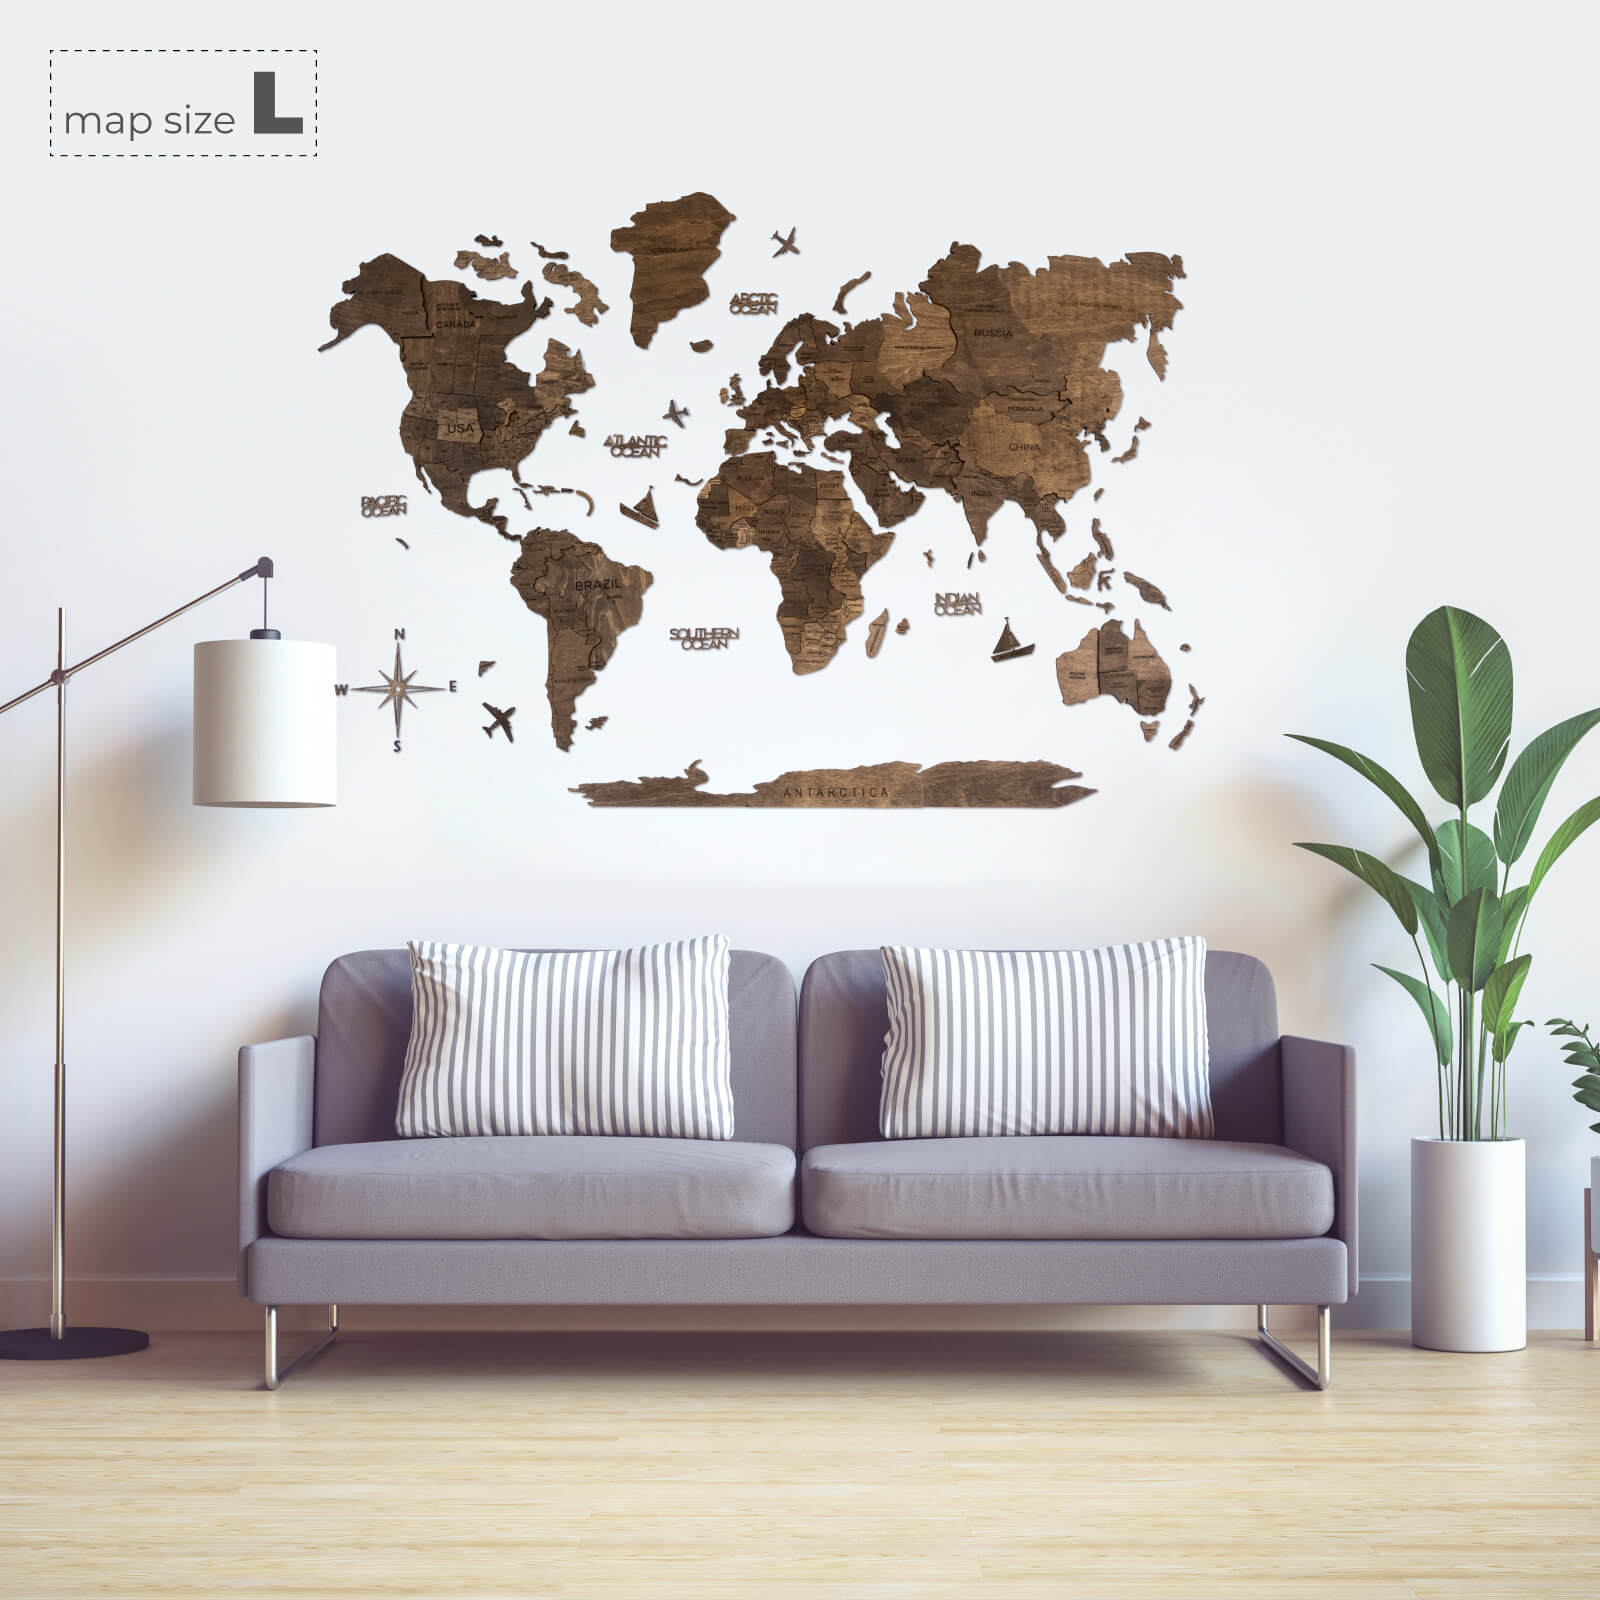 3D Wooden World Map Dark Walnut from Enjoy The Wood ‣ Good Price